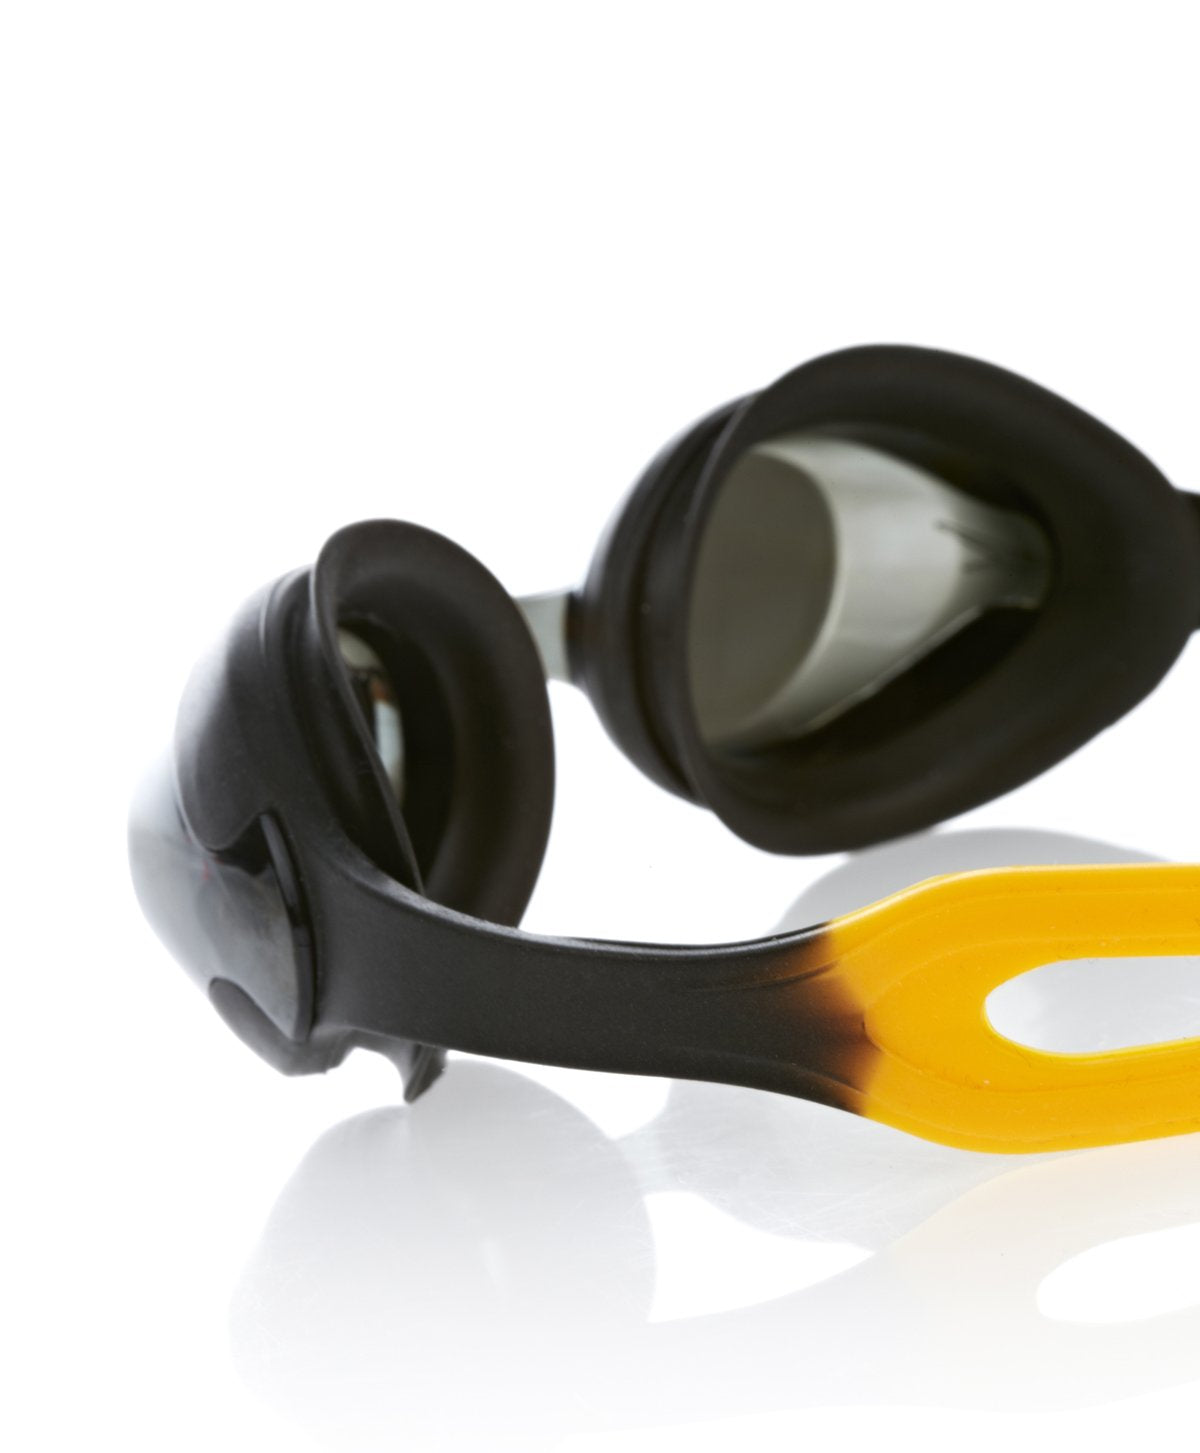 Speedo Unisex-Adult Merit Mirror Goggles (Assorted) - Best Price online Prokicksports.com